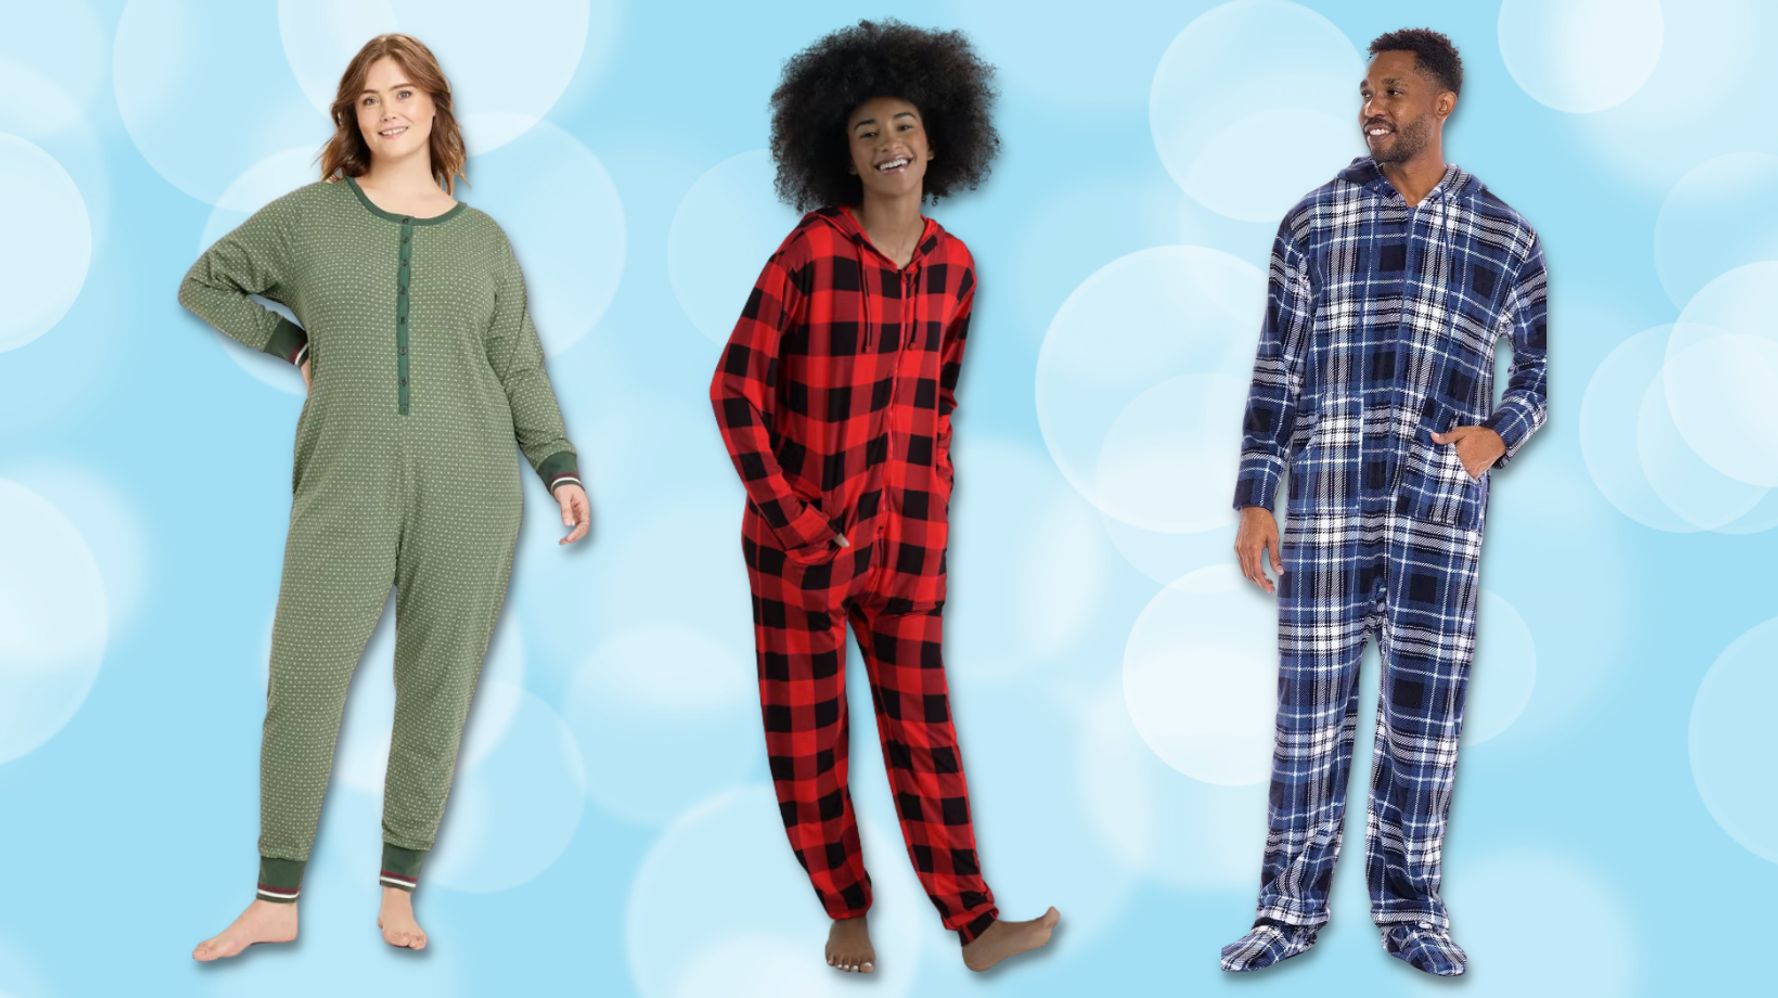 Women's Jammies For Your Families Gingerbread Man Holiday Fairisle  Microfleece One-Piece Pajamas